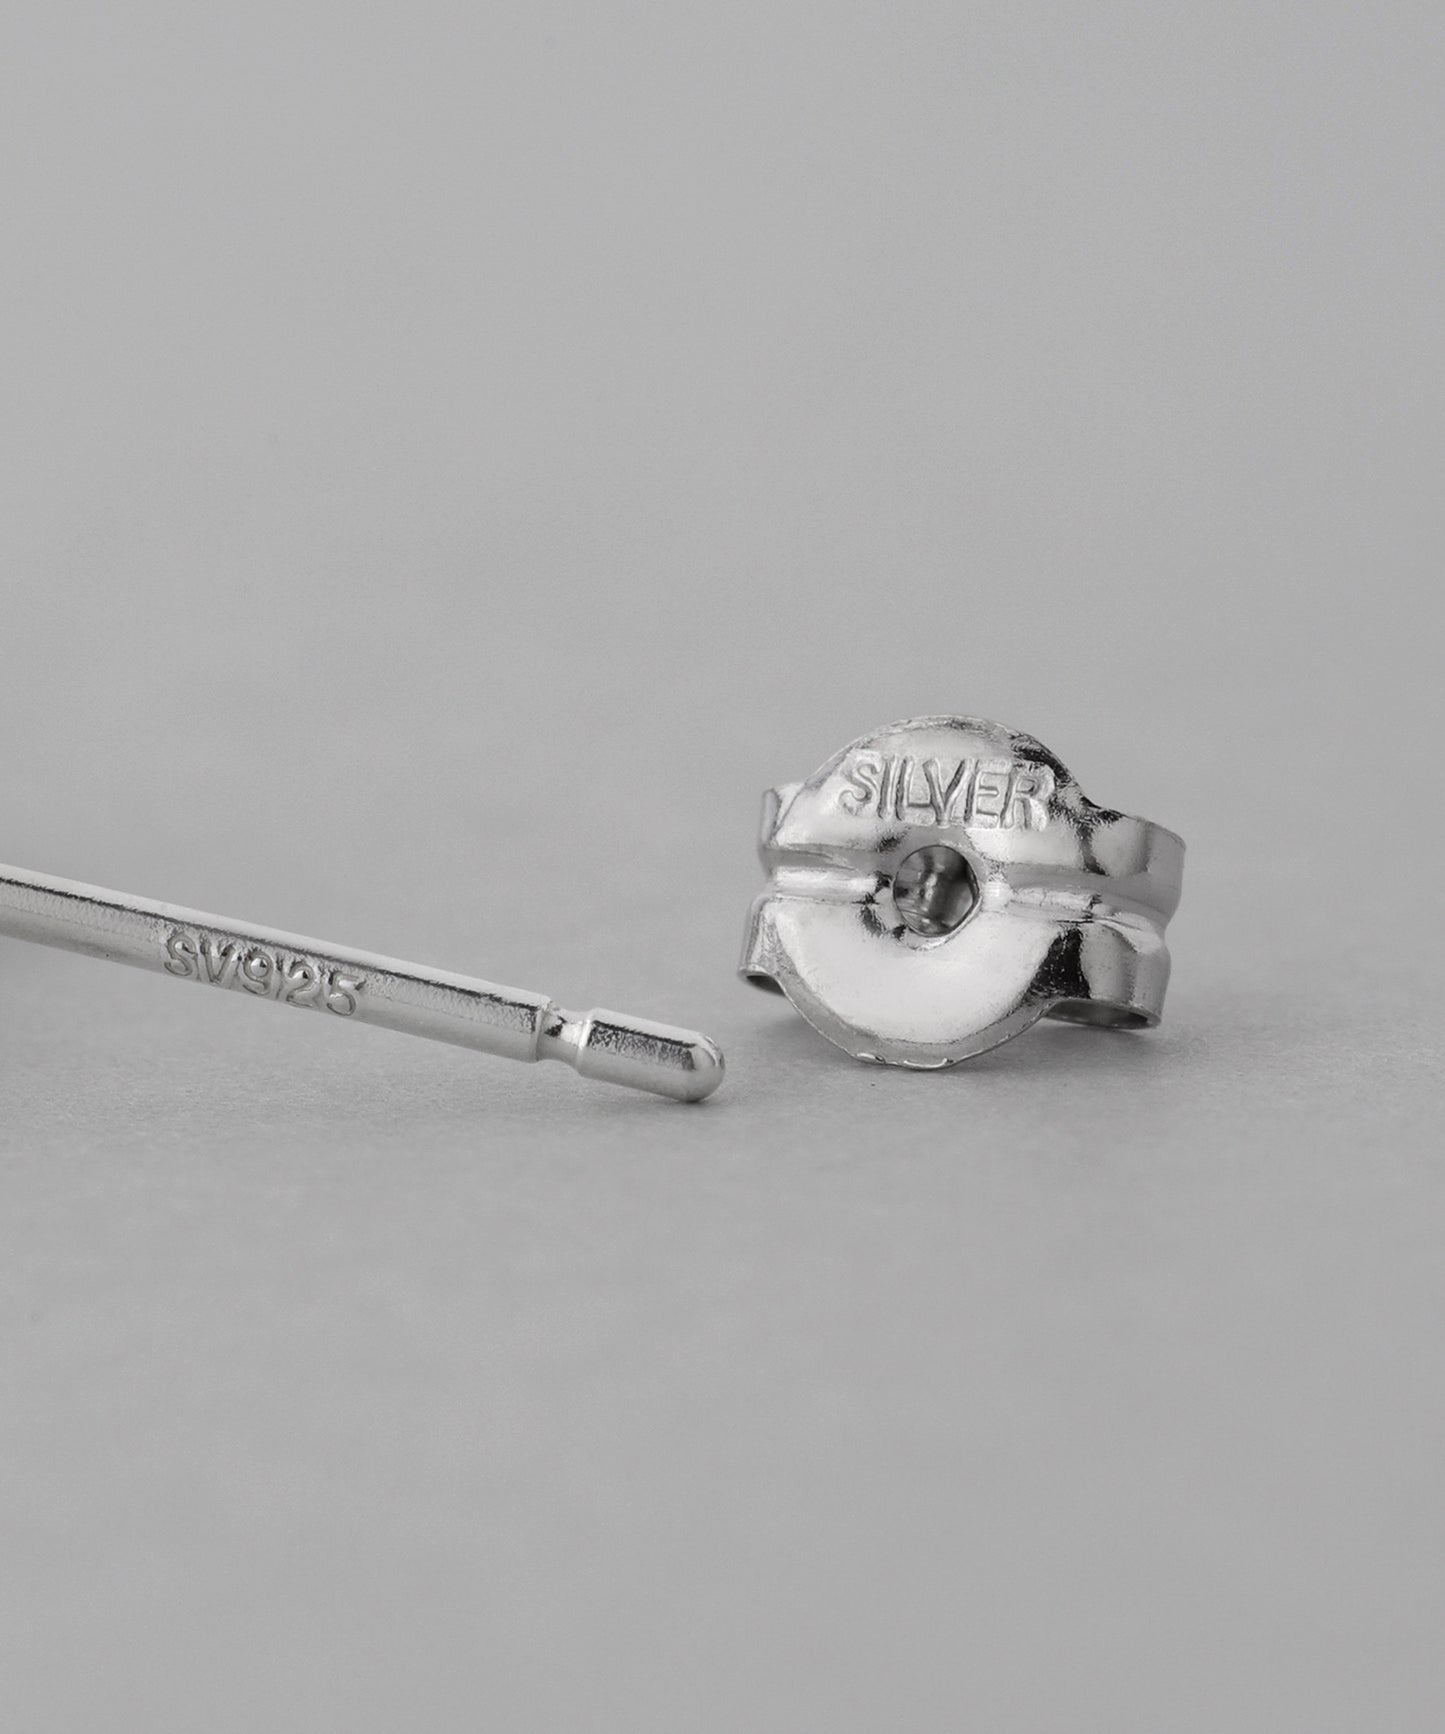 Pearl × Bijoux Marquis Earrings [925 silver] [Basic]